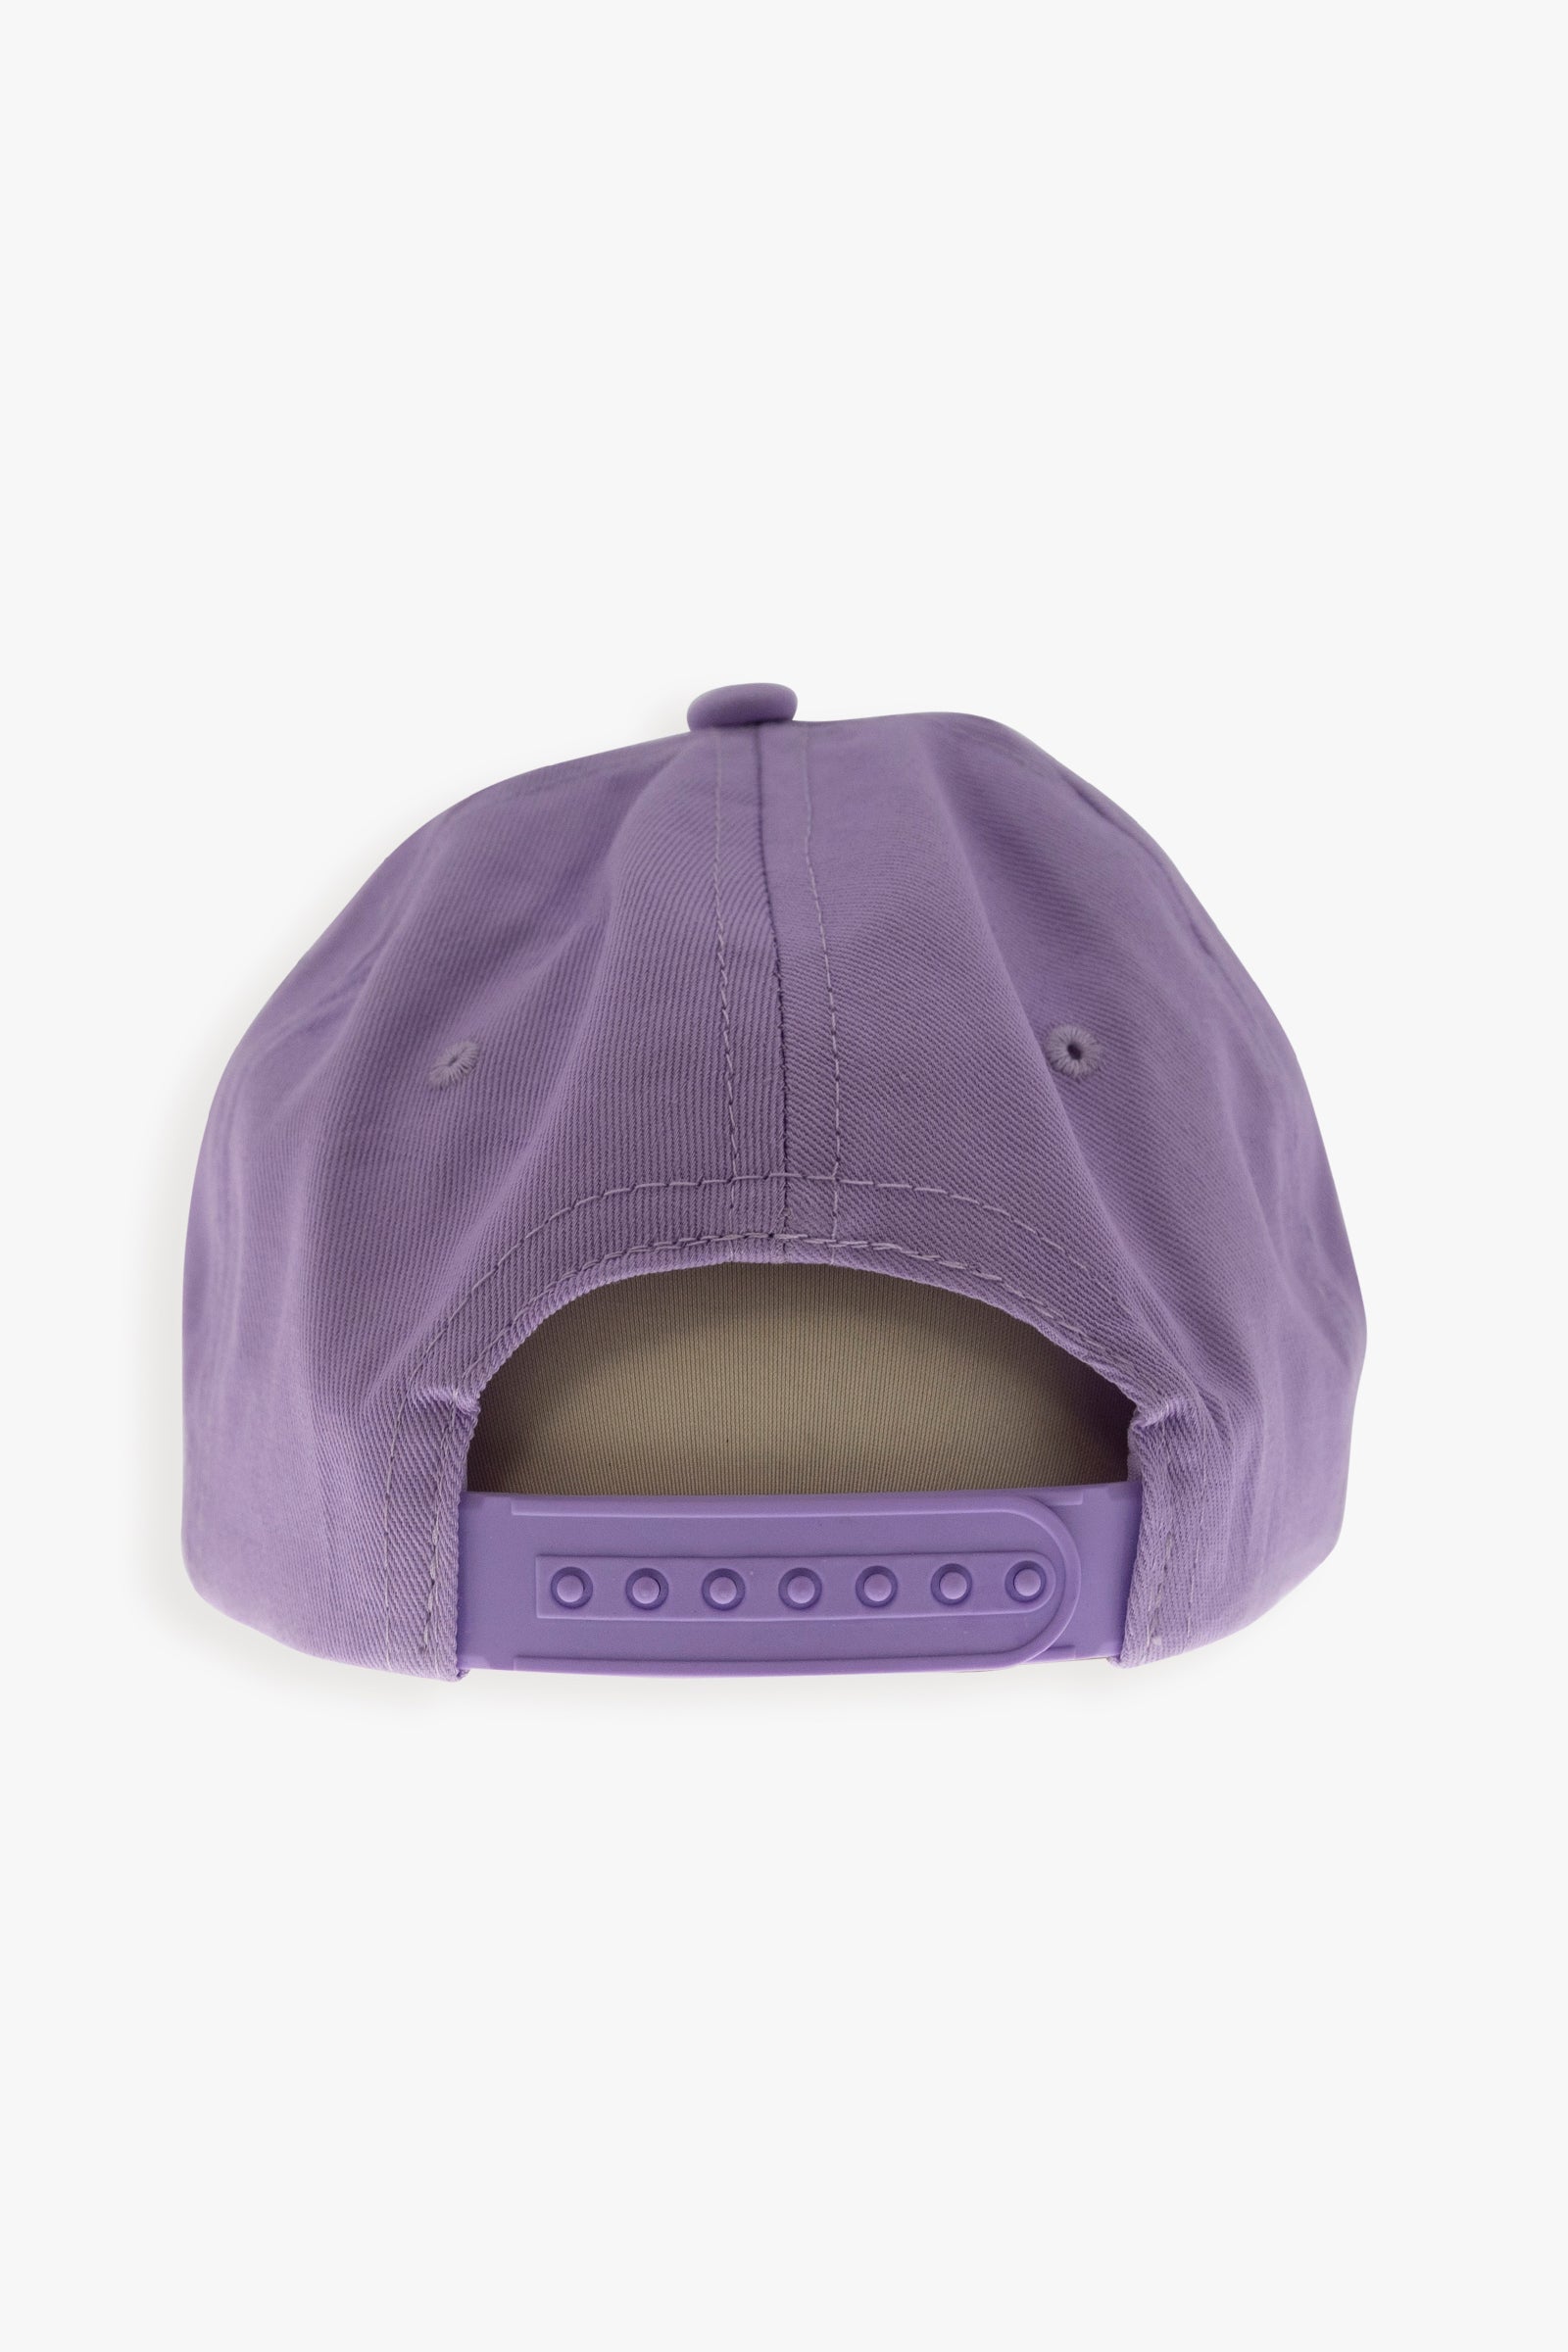 Gertex Barbie Youth Girls Baseball Cap Hat in Purple